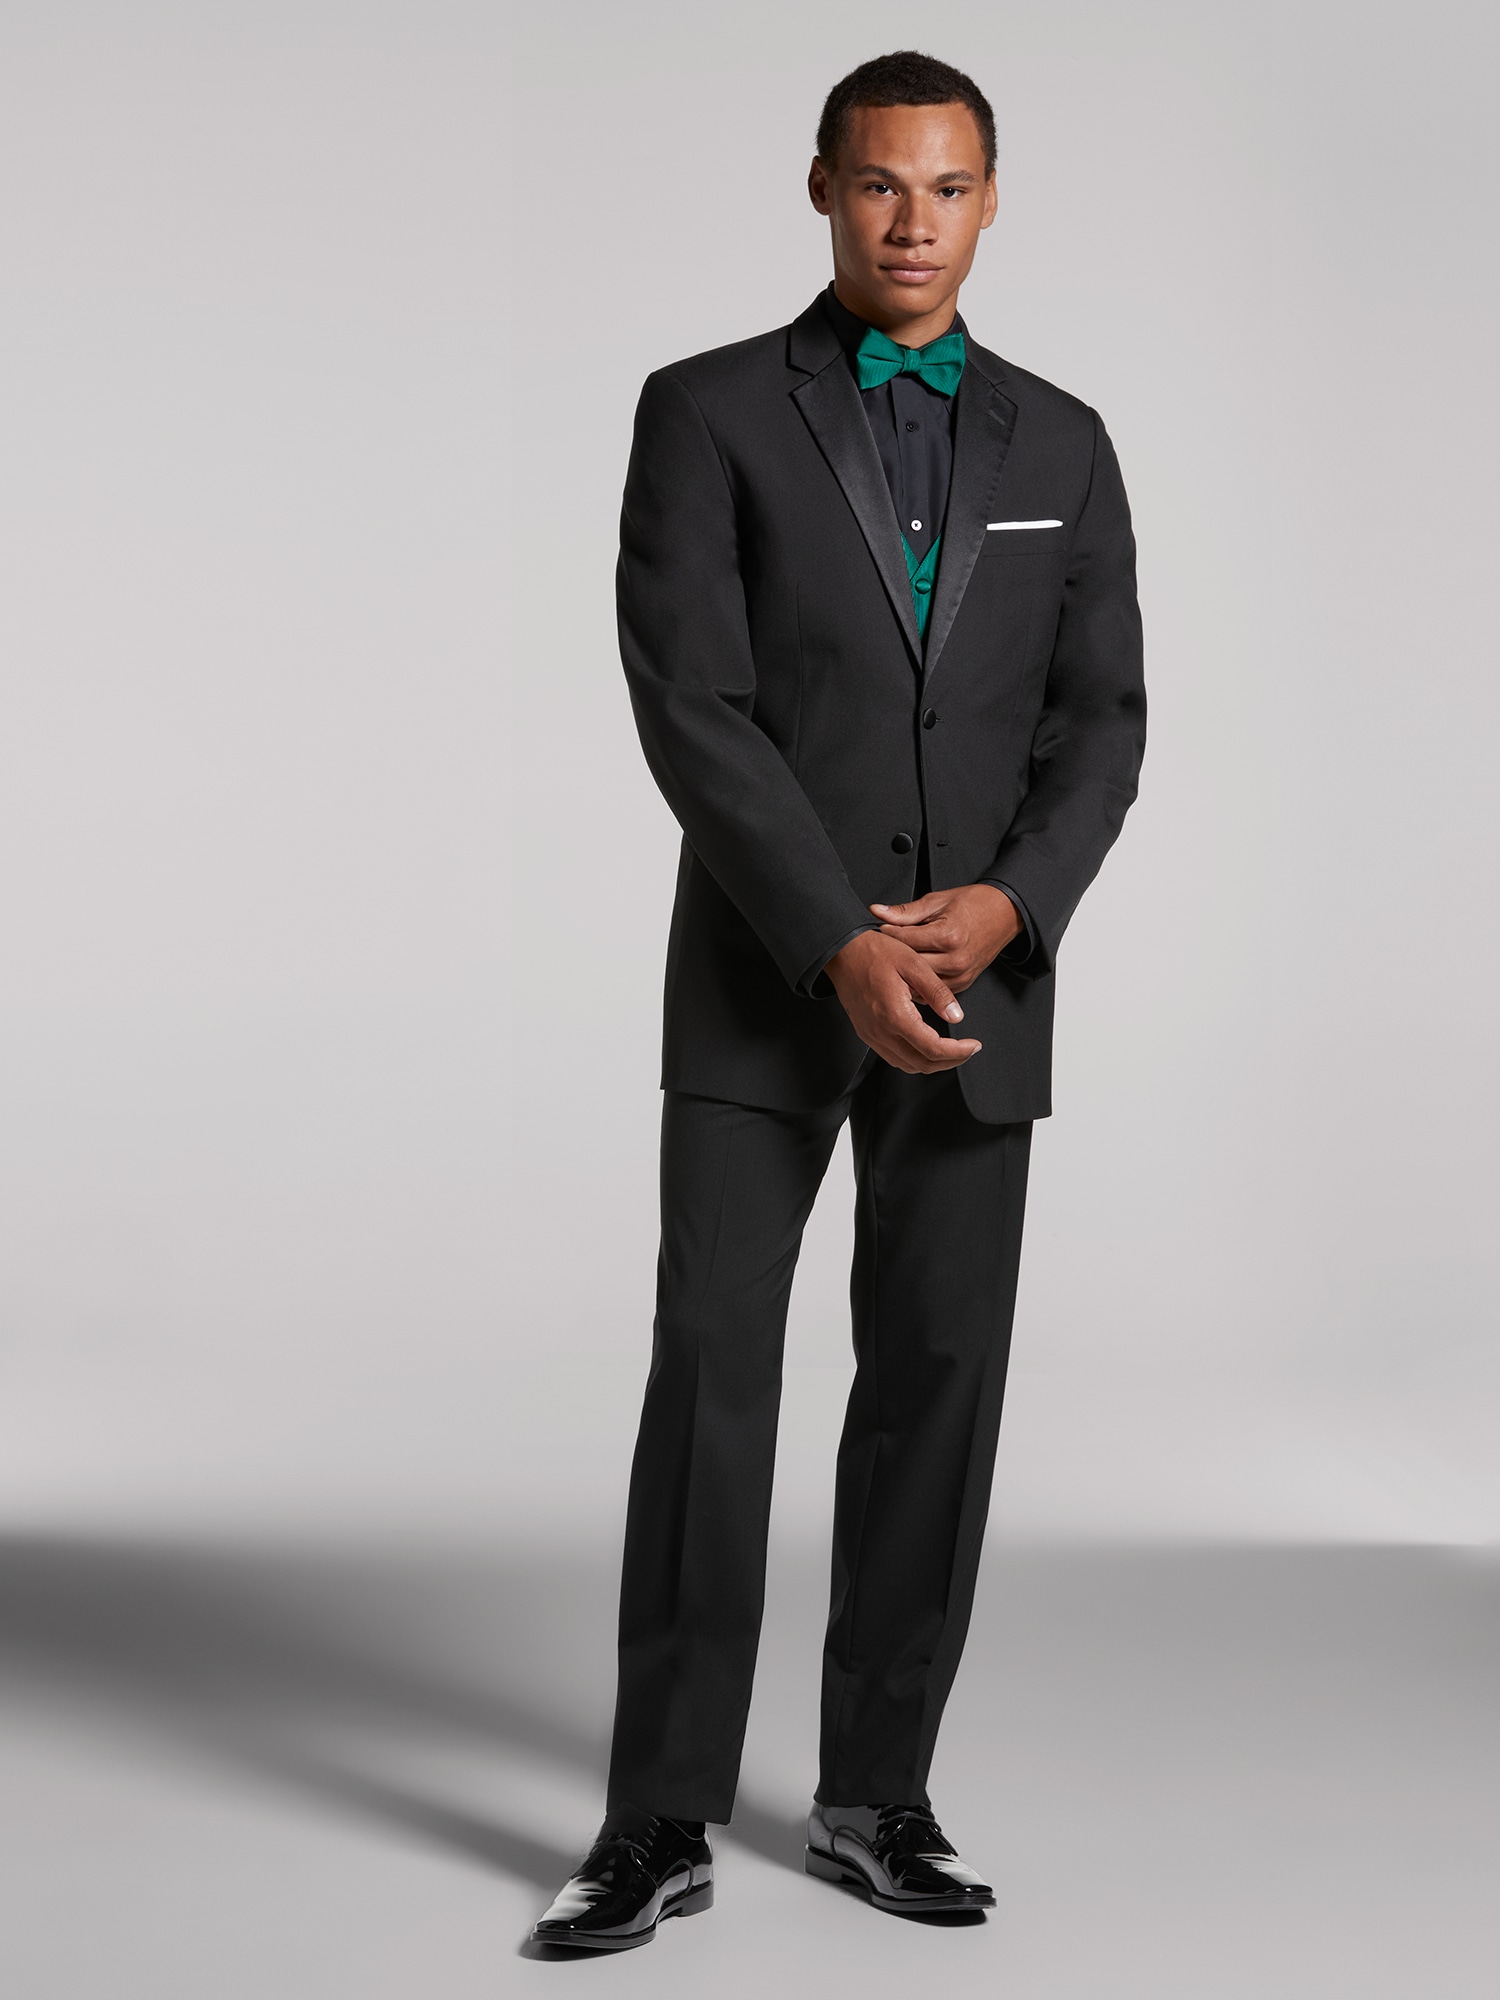 Tuxedo & Suit Rentals